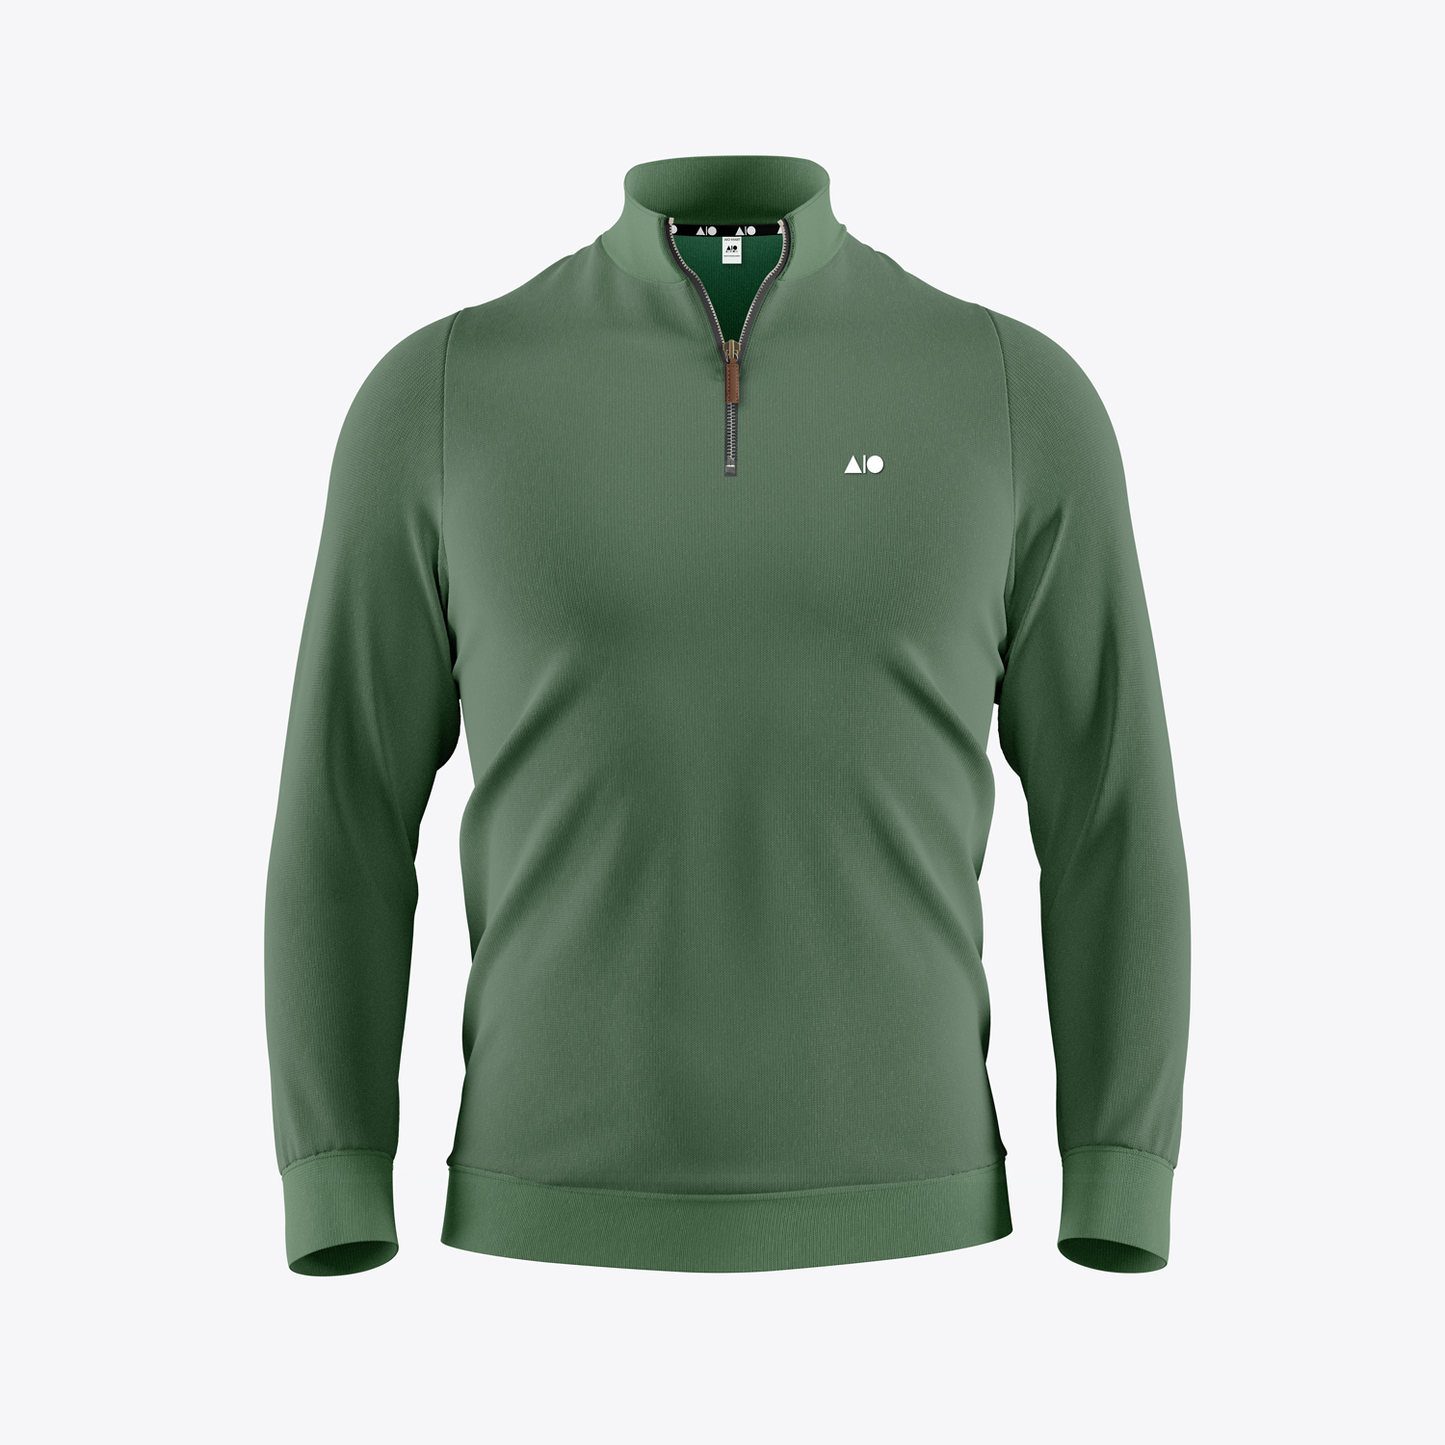 Mens Sweatshirt (Zipper) - Sea Green